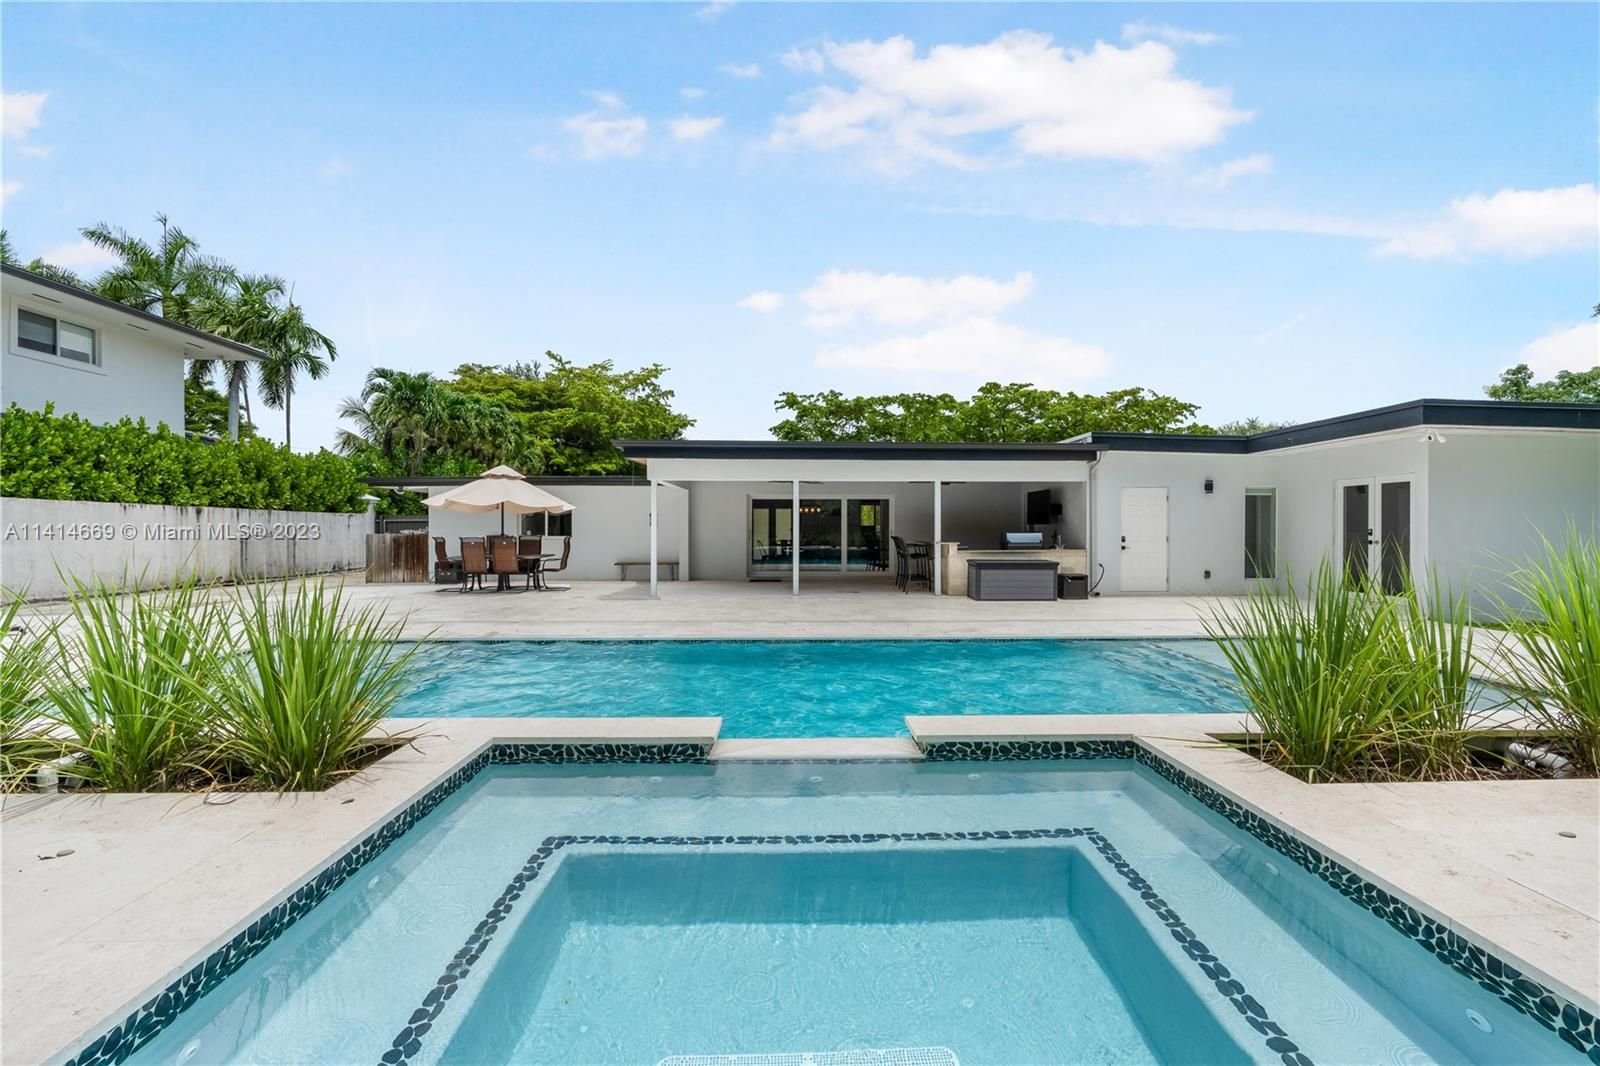 Real estate property located at 7870 97th St, Miami-Dade County, Miami, FL